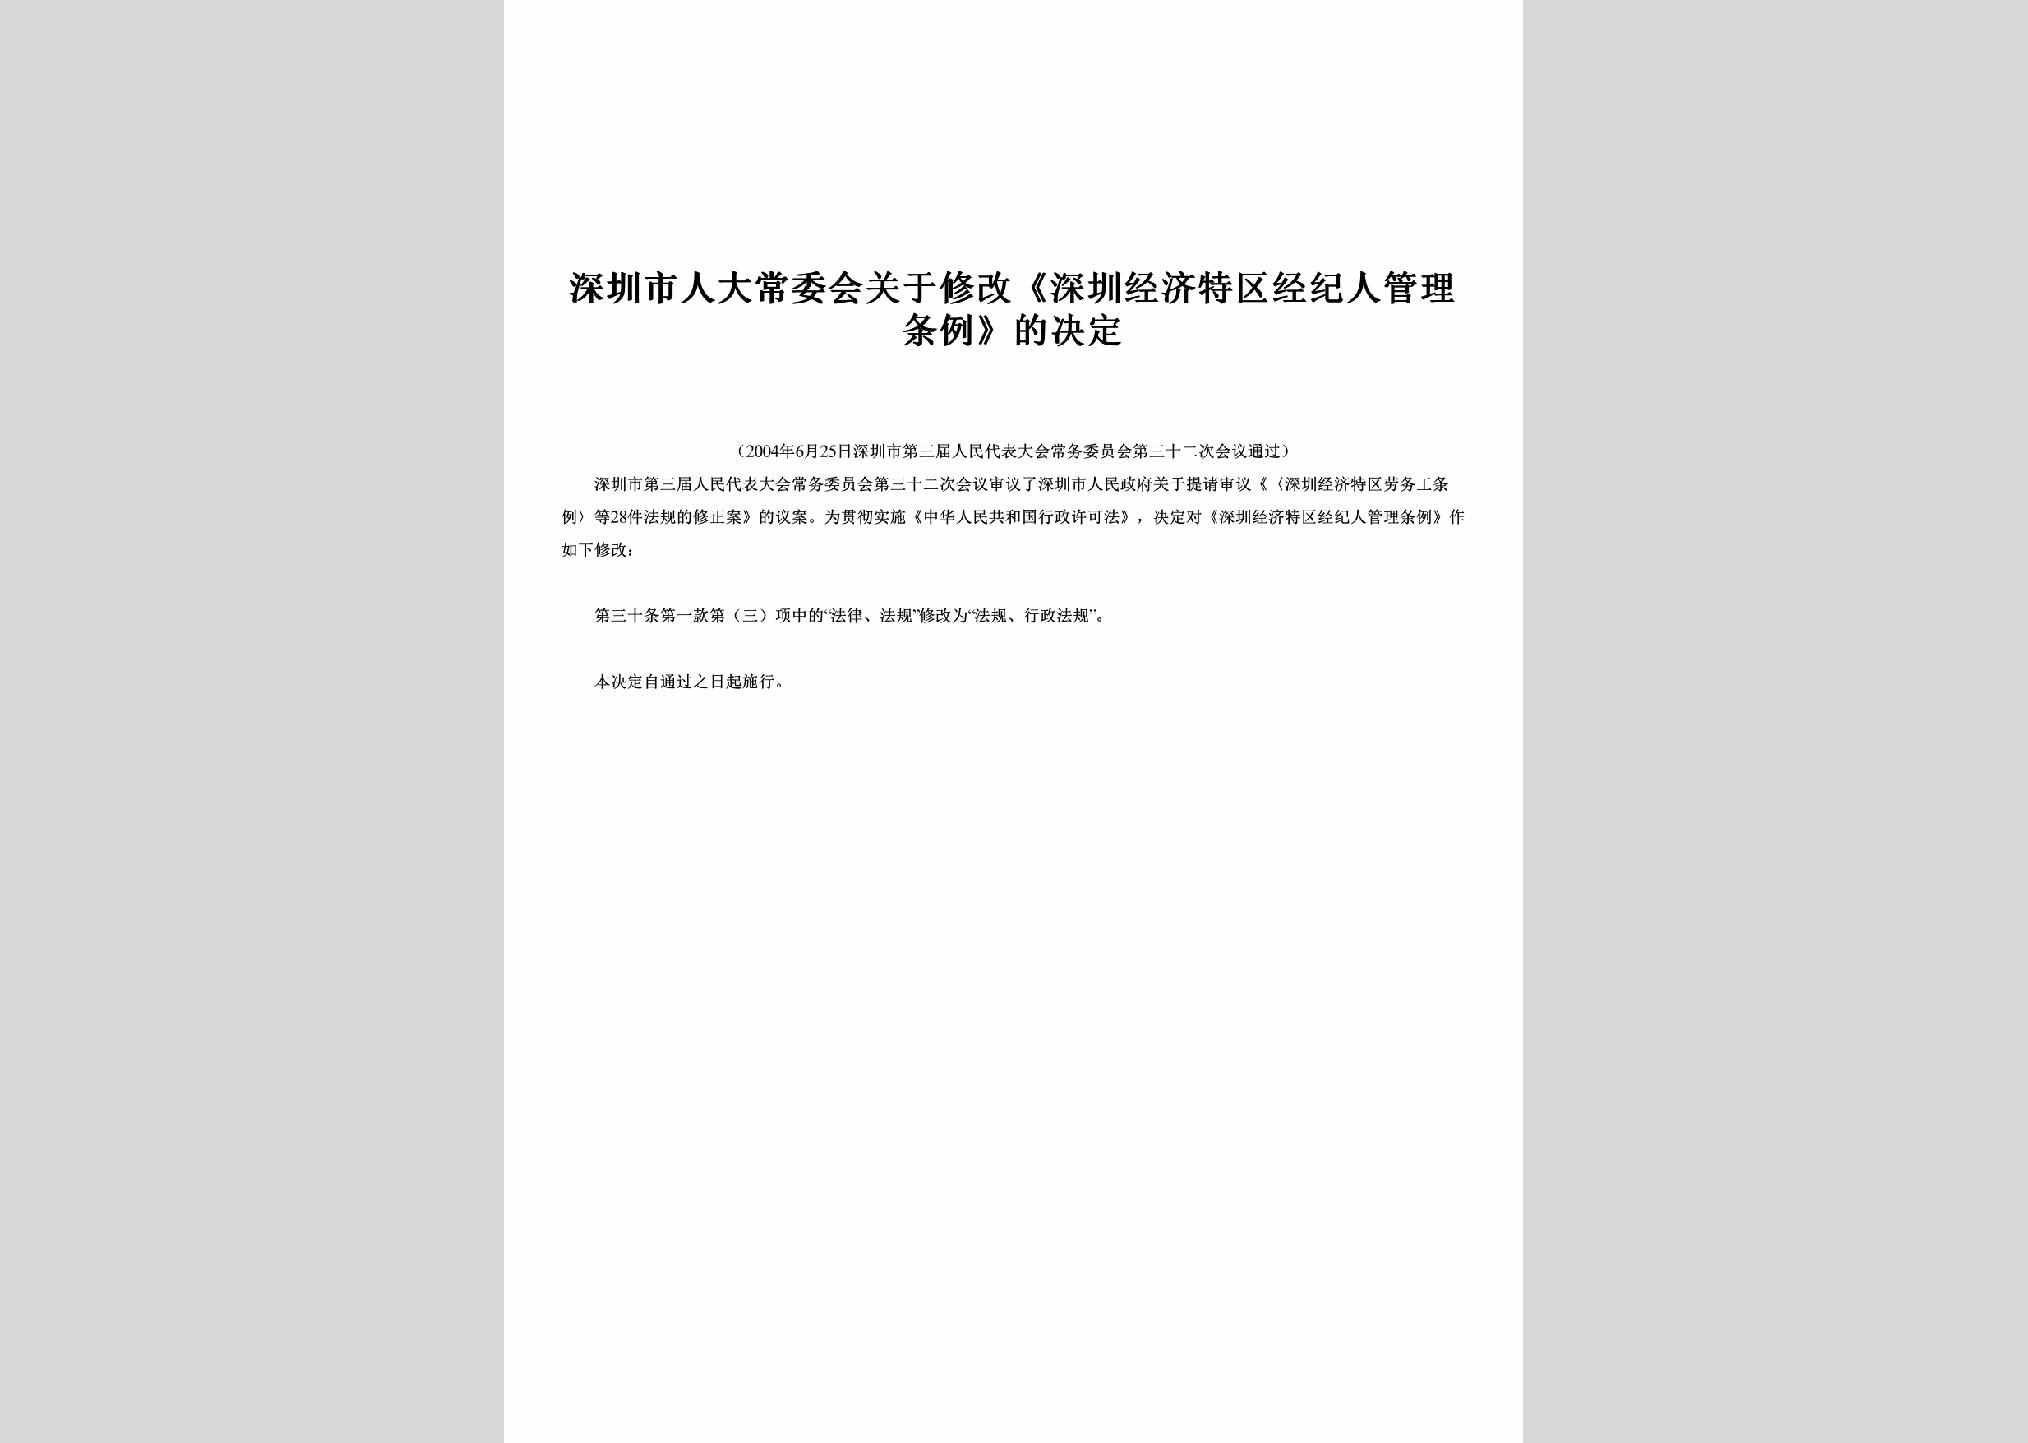 GD-JJRGLTL-2004：关于修改《深圳经济特区经纪人管理条例》的决定